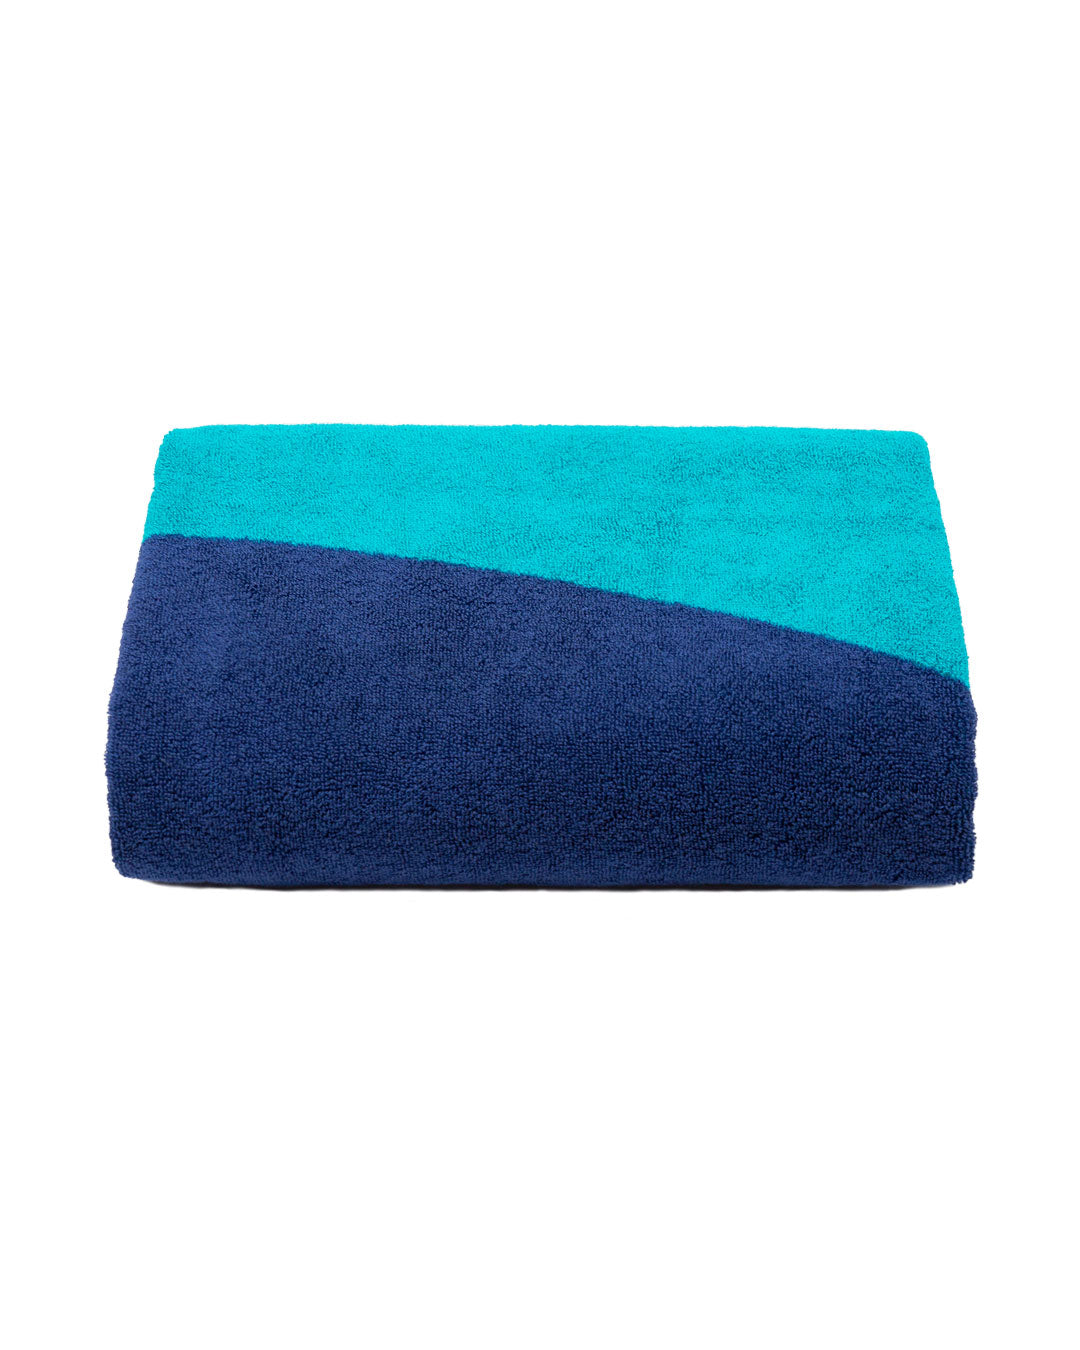 Swell Beach Towel